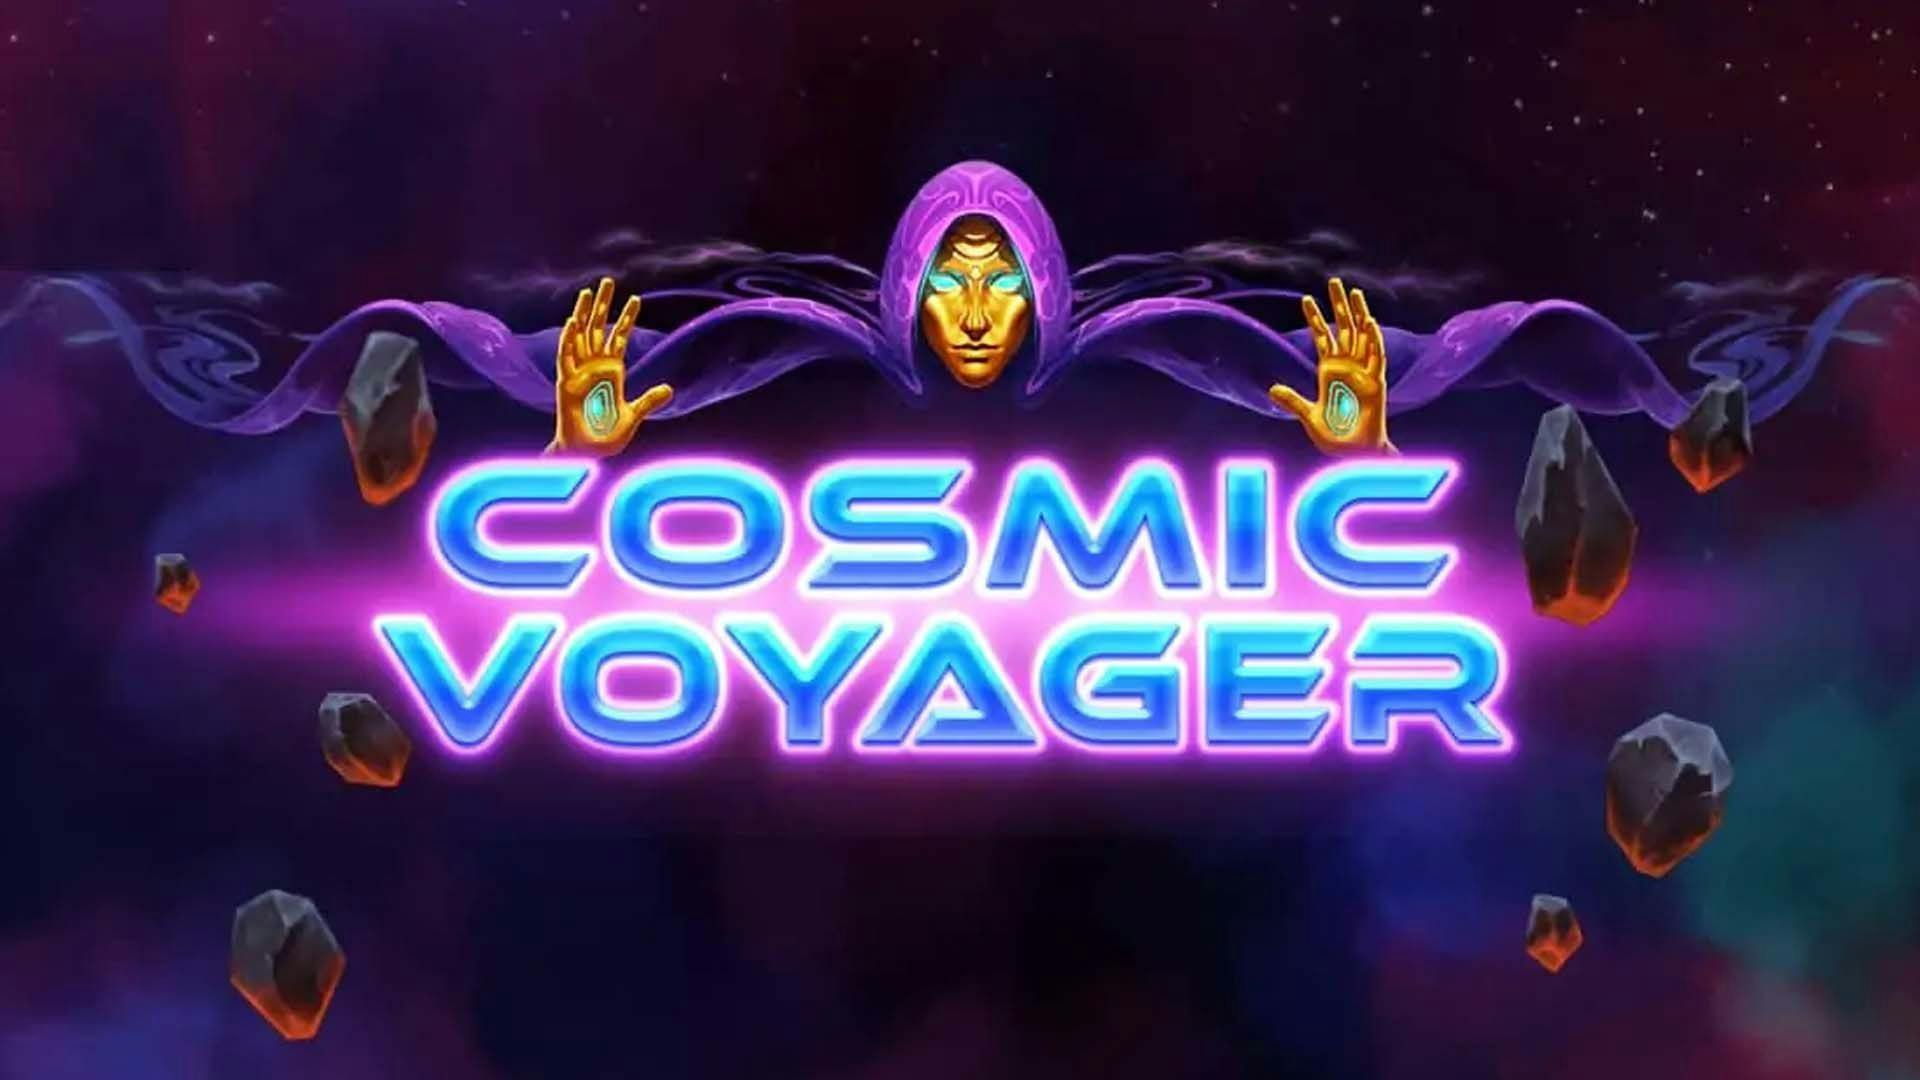 Cosmic Voyager Slot Machine Online Free Game Play